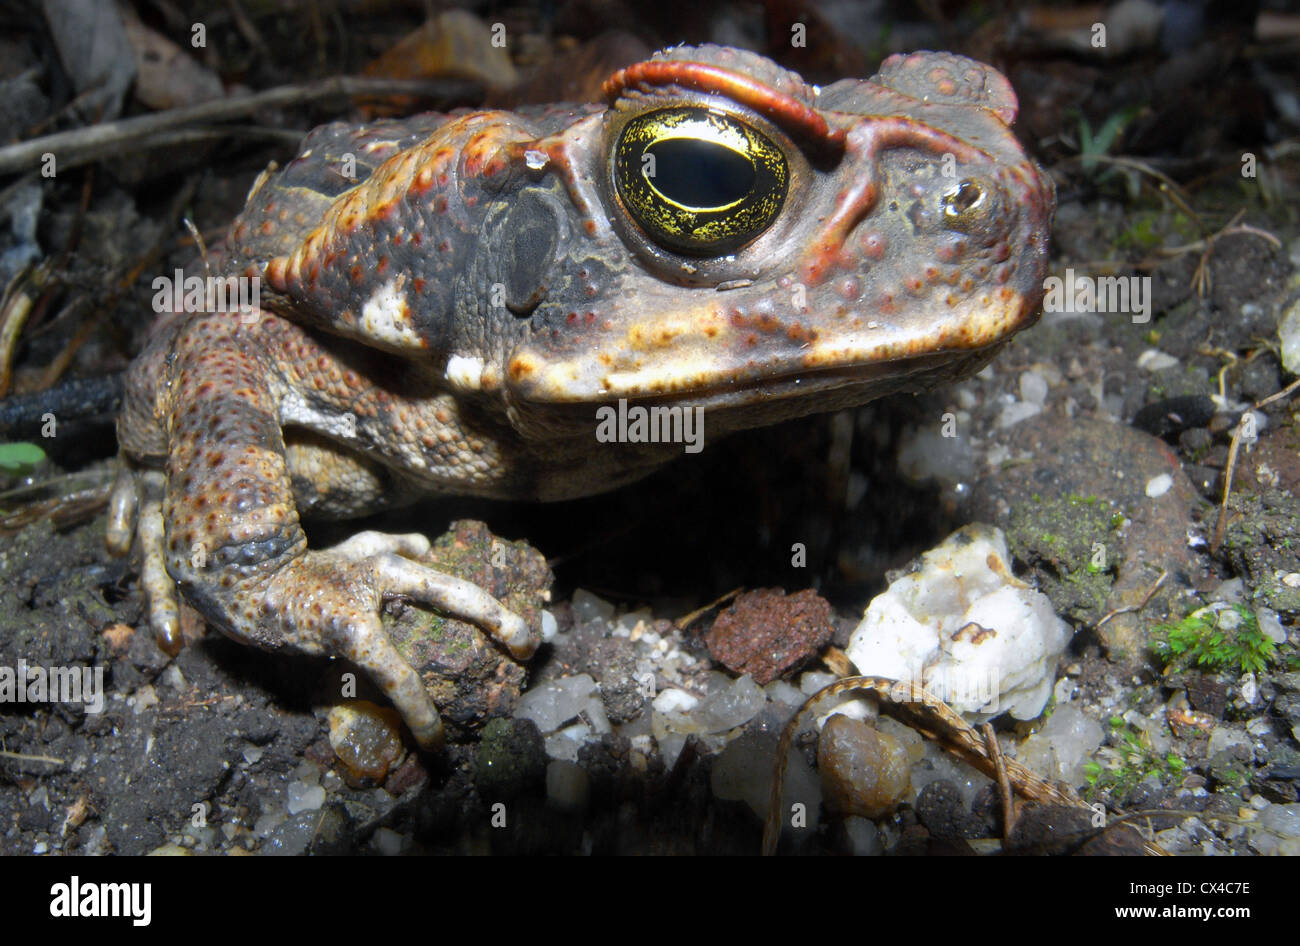 Cane toad (Bufo marinus aka Rhinella marinus), an invasive pest in northern Australia Stock Photo